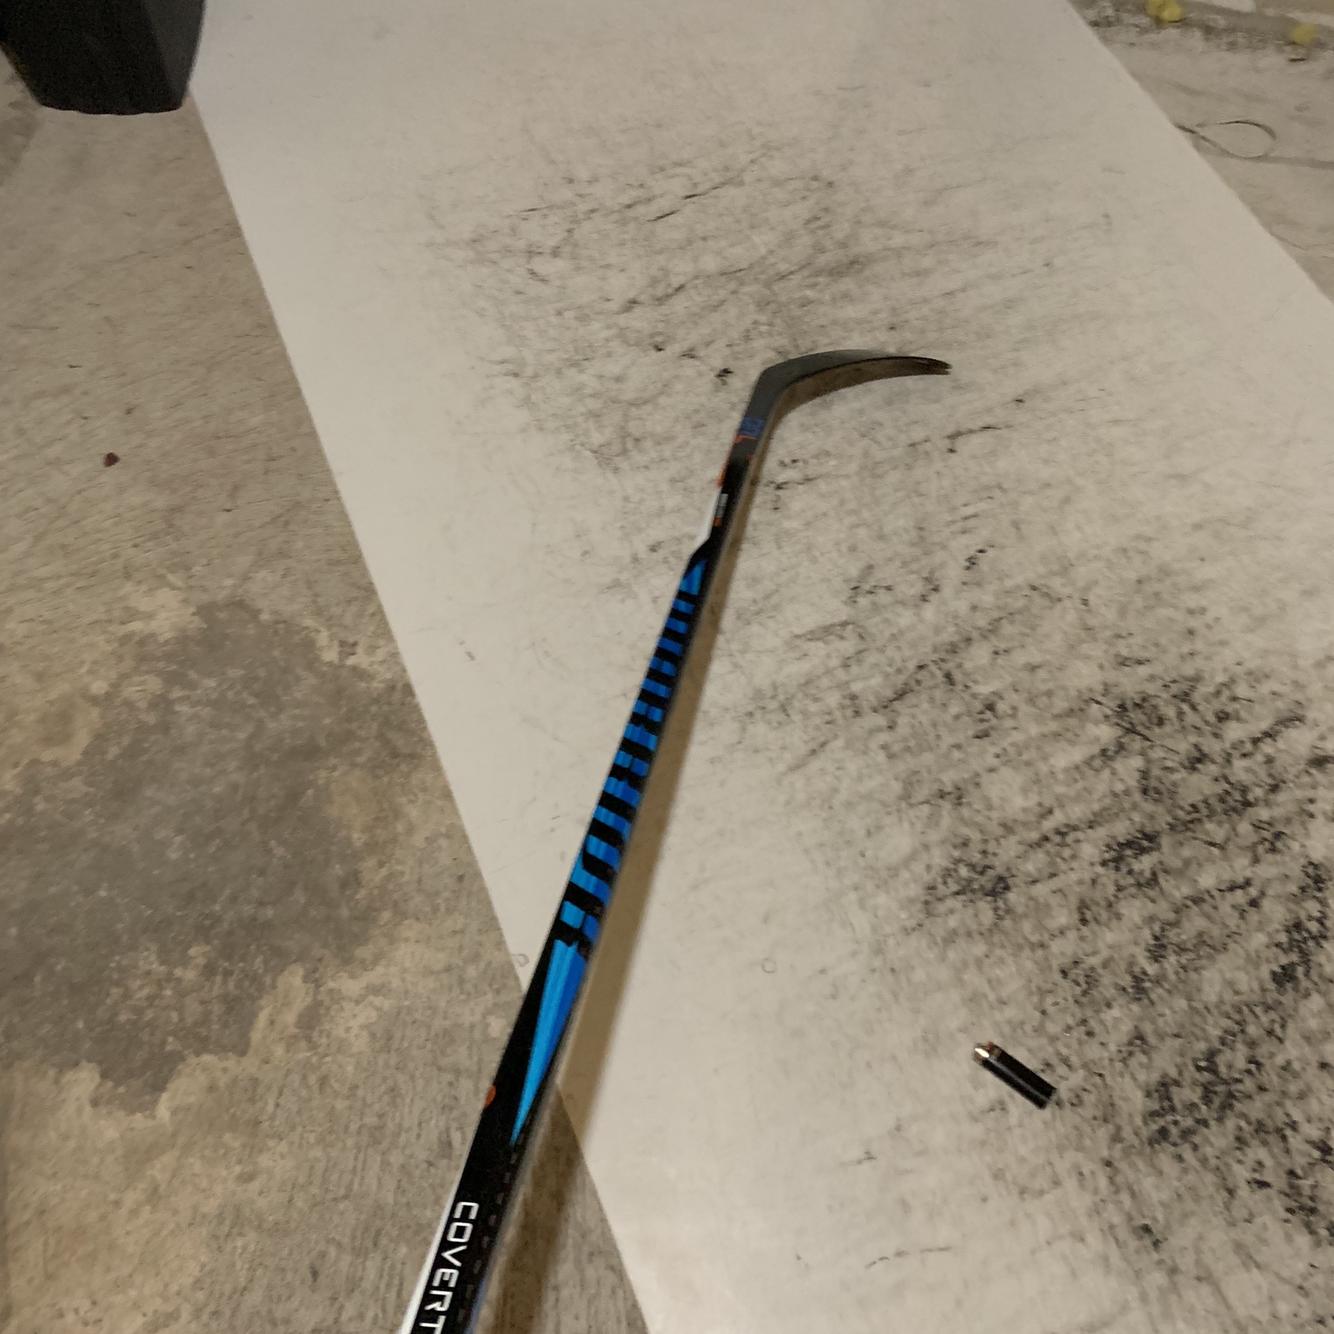 WARRIOR Covert QR4 Senior Composite Hockey Stick 